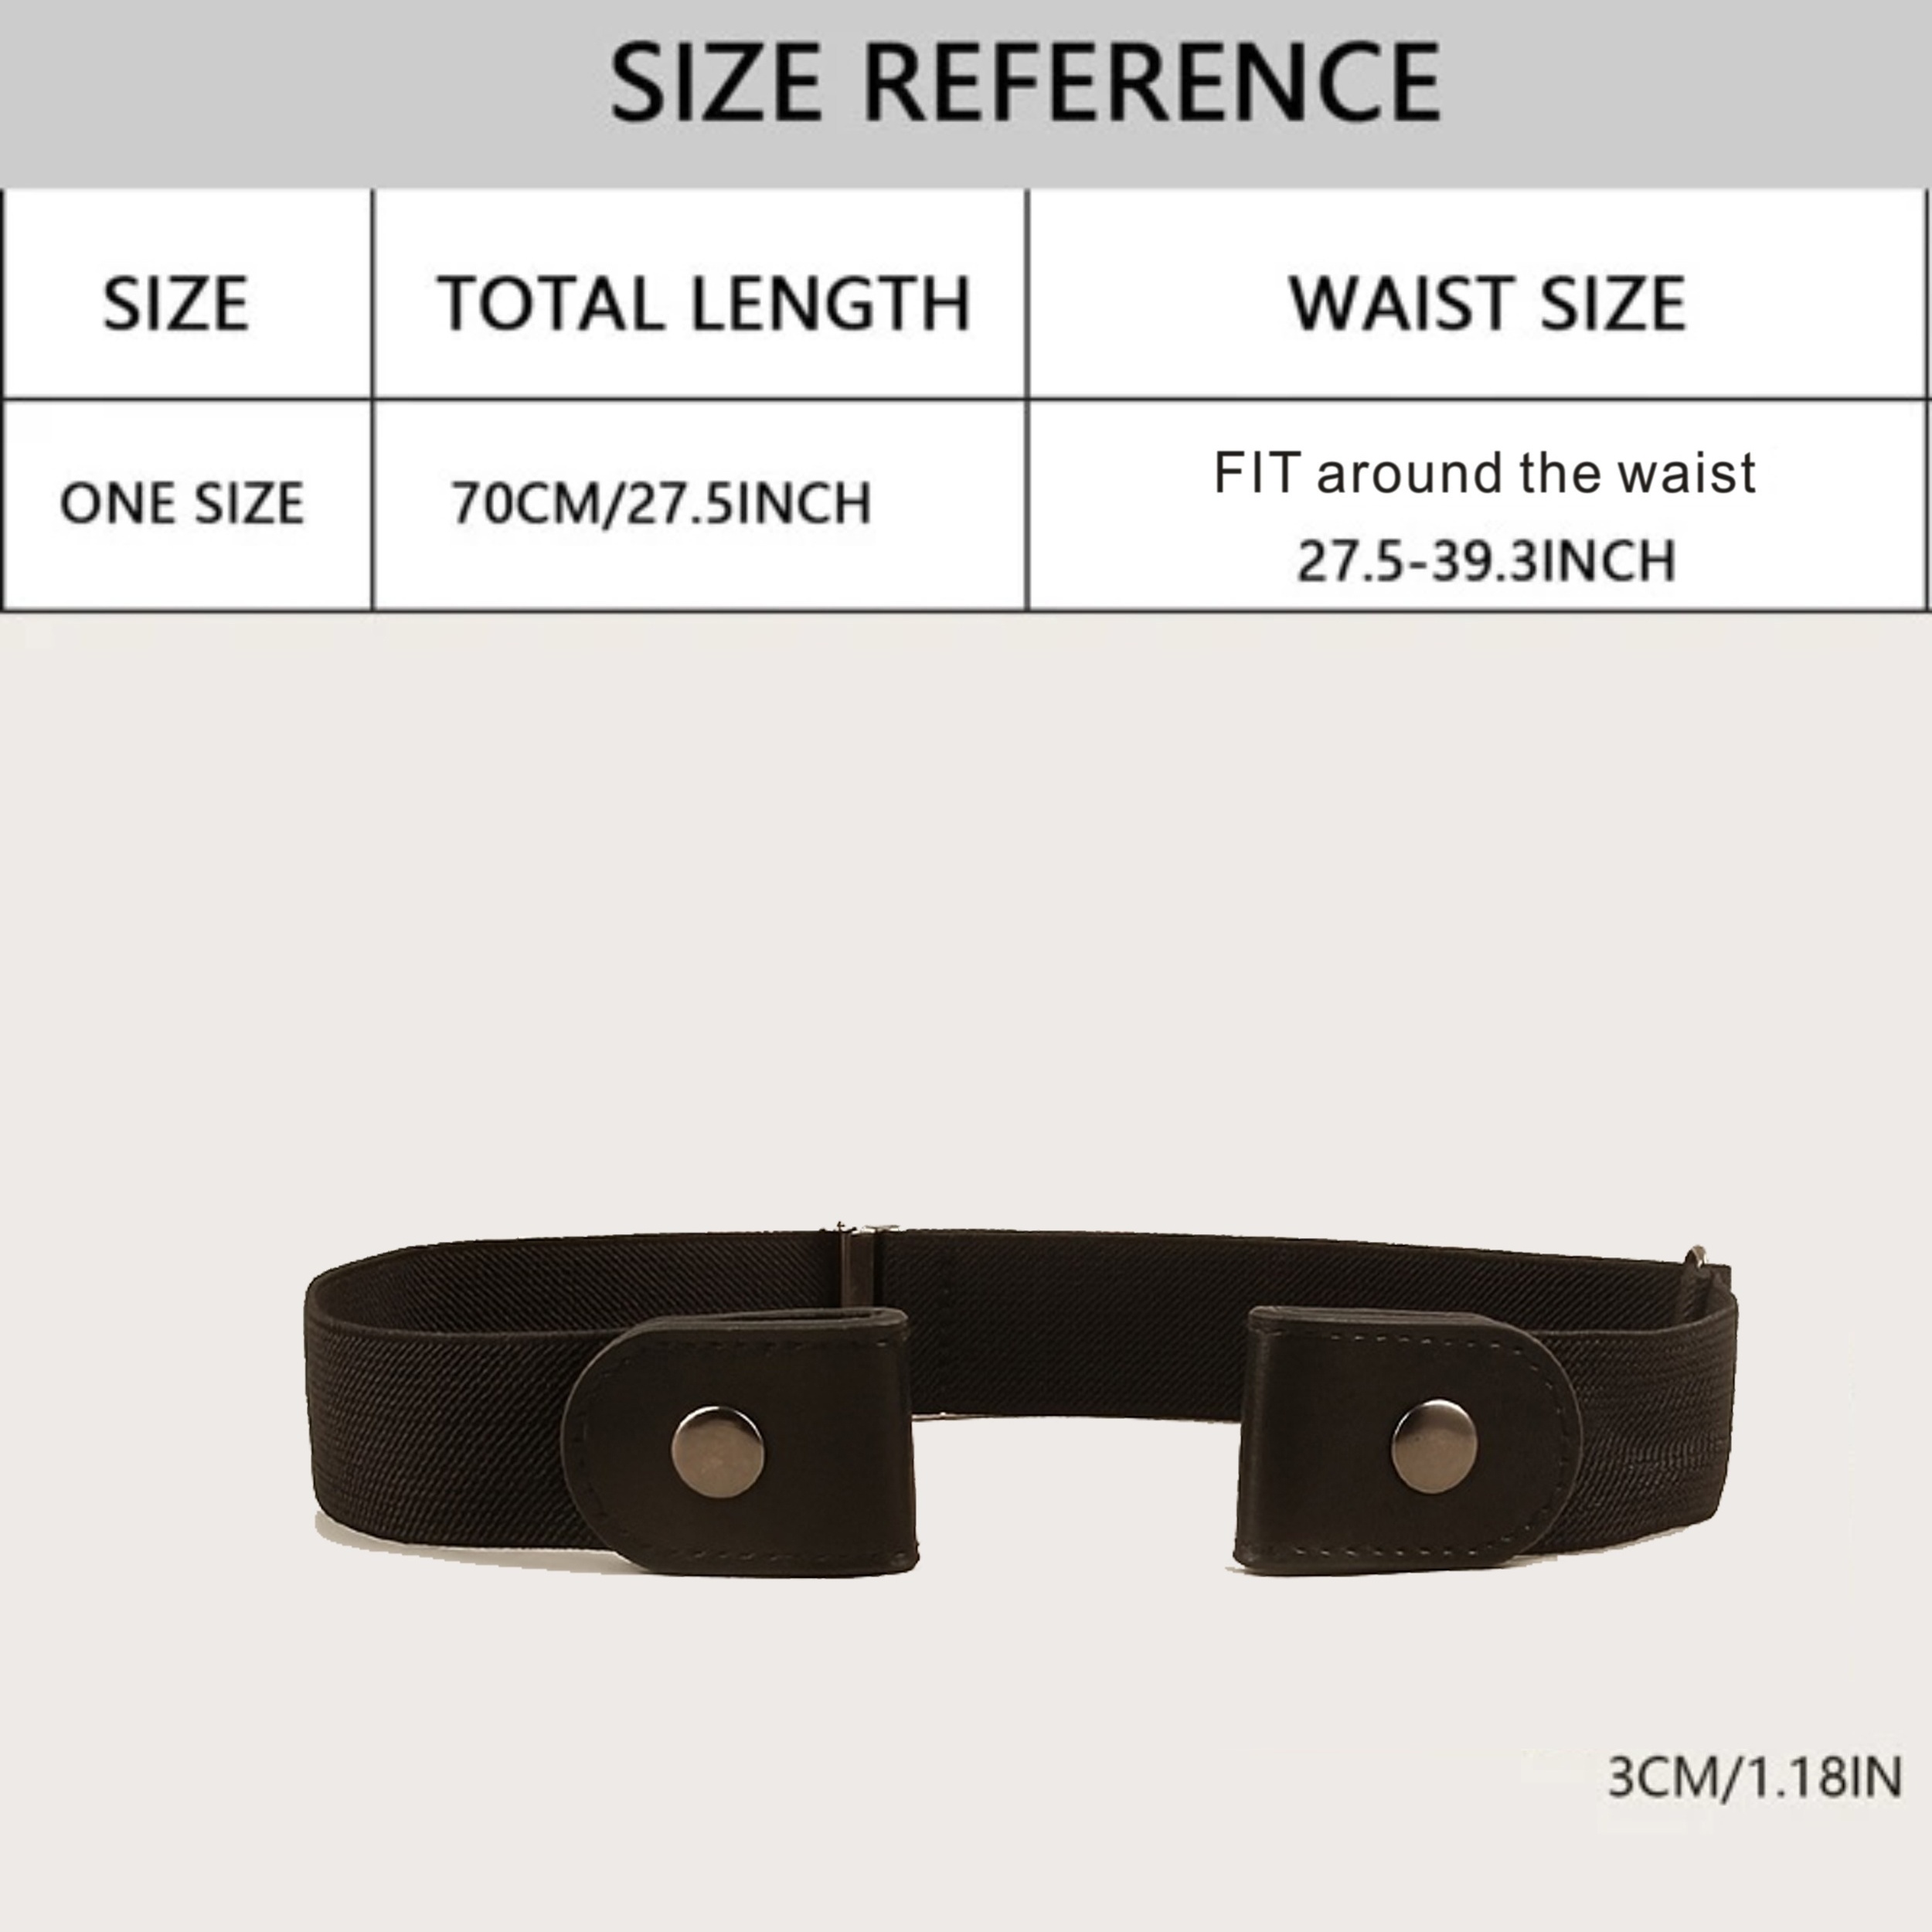 TOURZOO Buckle Free Elastic Belt Invisible No Buckle Stretch Slim Waist Belt  For S-M:Waist size 20''-50'', 1p/ Red купить от 3524 рублей в  интернет-магазине из США с доставкой в Россию